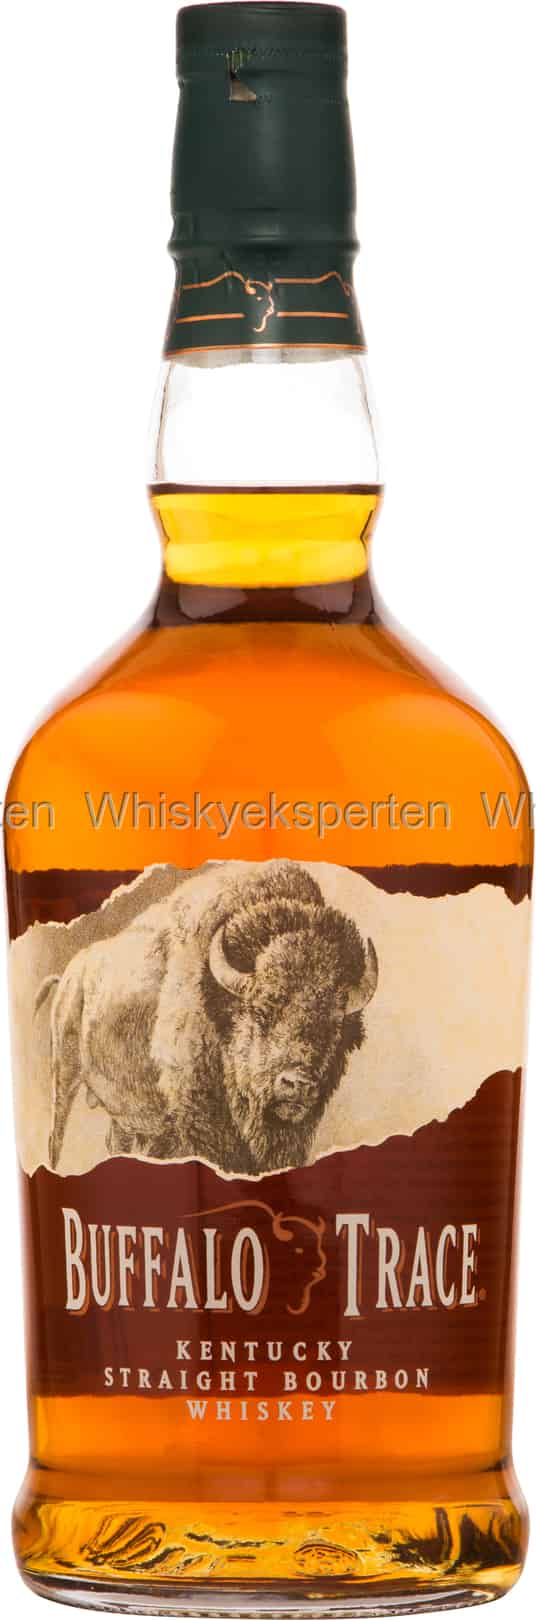 tonehøjde Insister Udvalg Buffalo Trace Bourbon Whisky